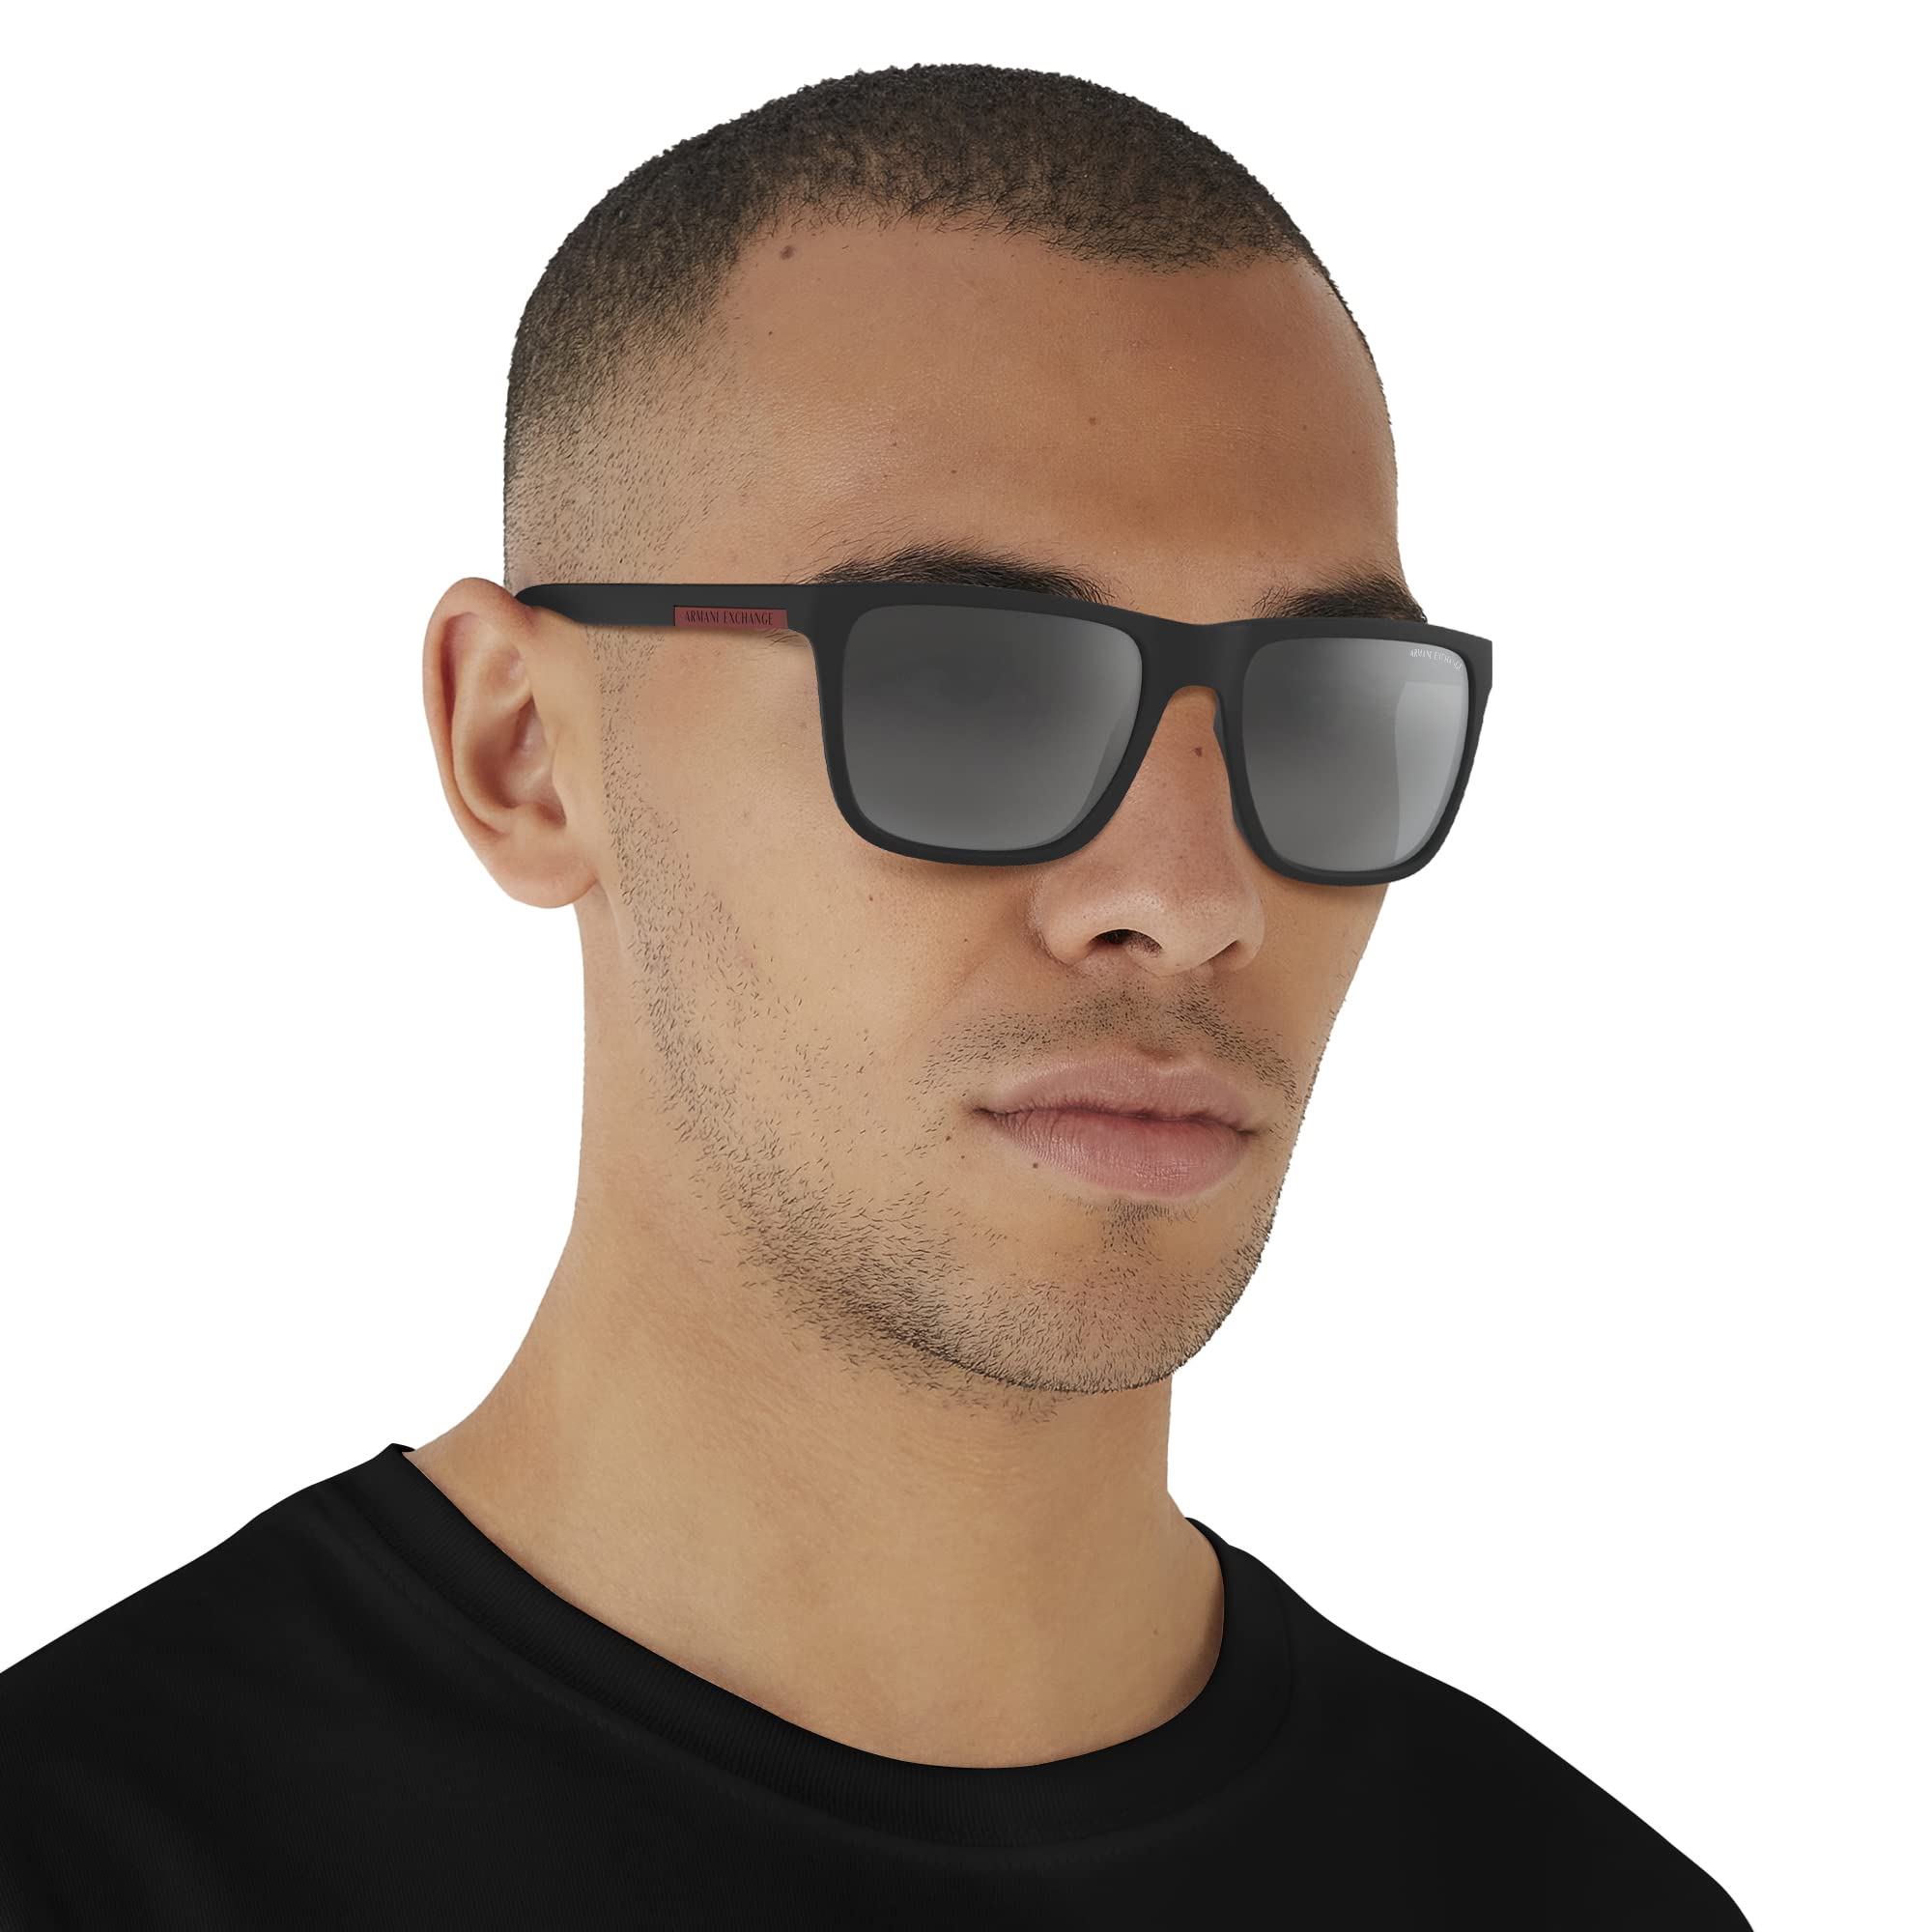 Armani Exchange Man Sunglasses Matte Black Frame, Mirror Black Lenses, 57MM